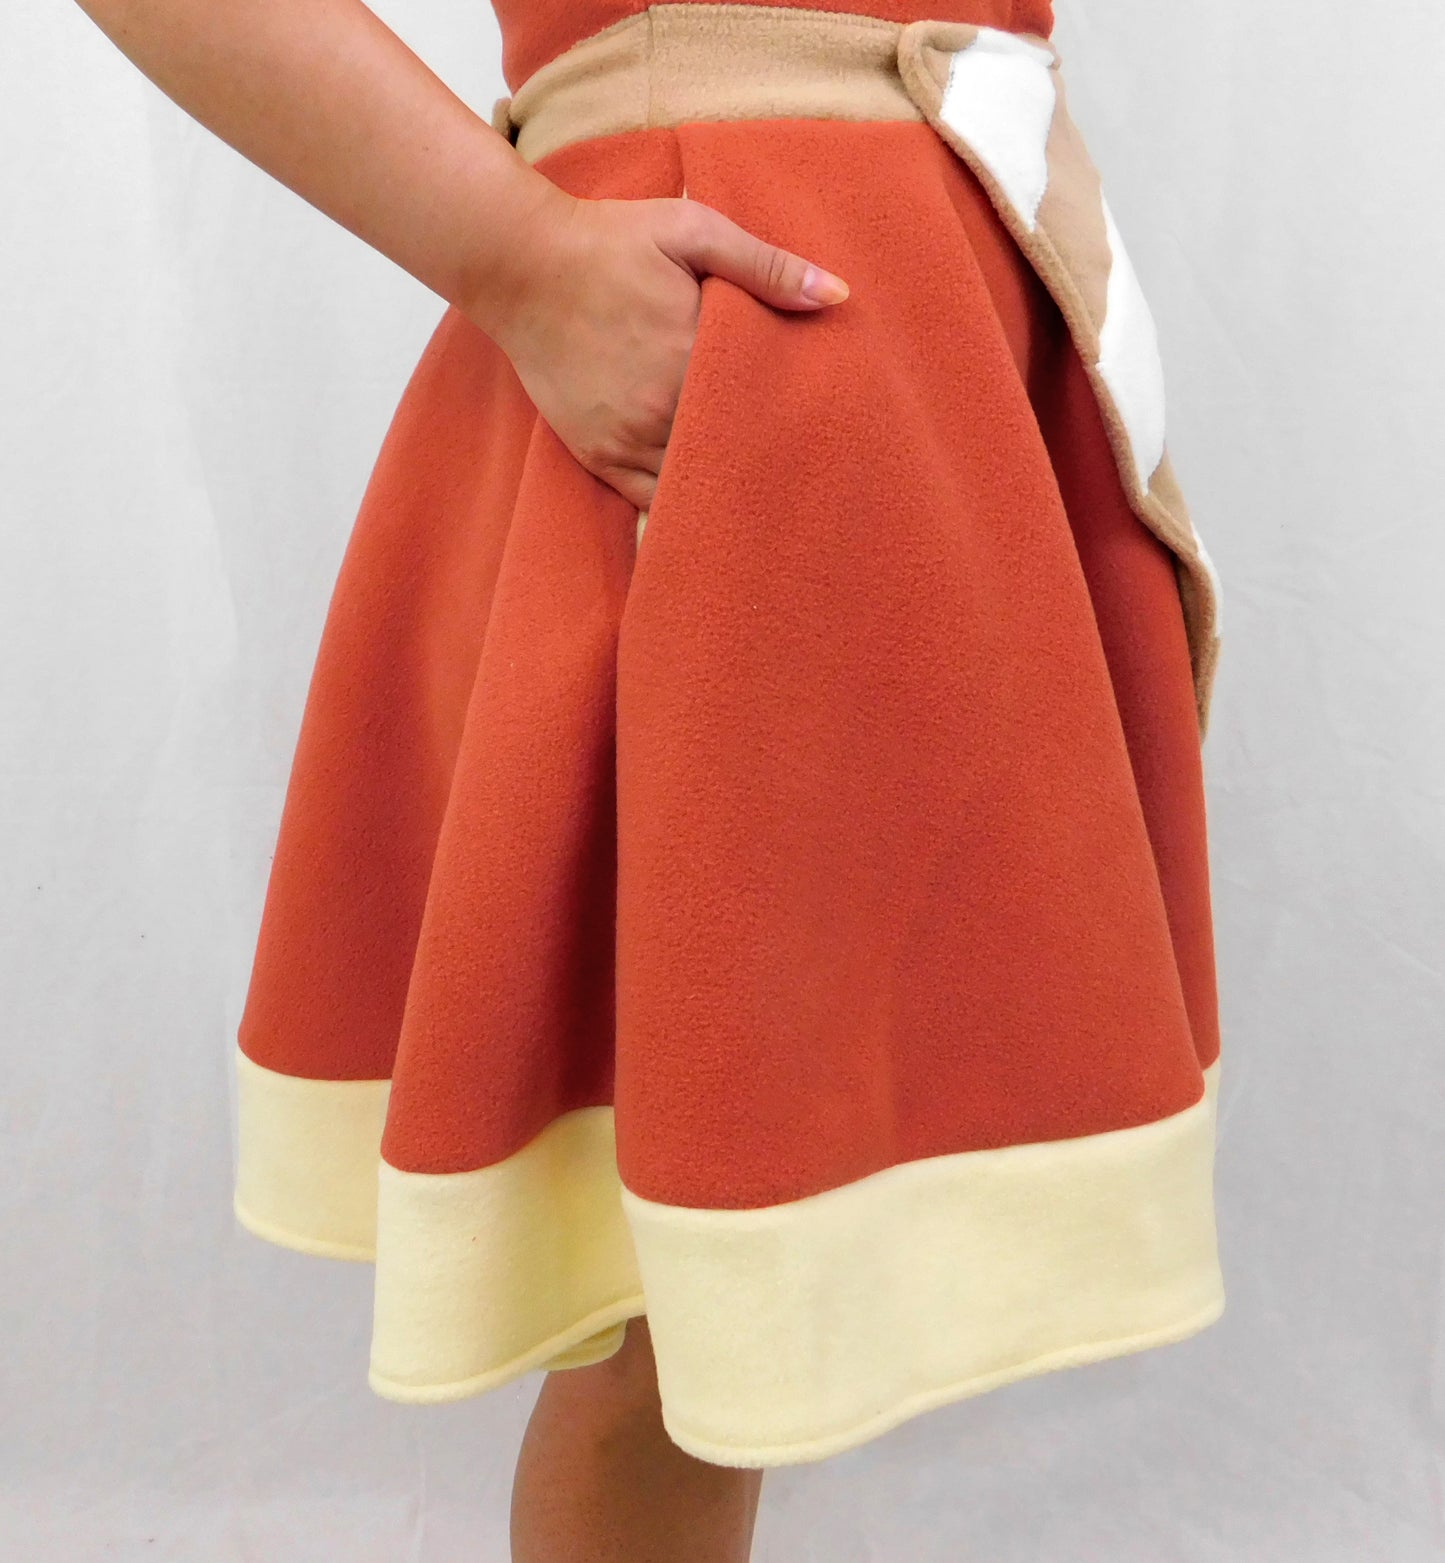 Bokoblin Inspired Kigurumi Dress